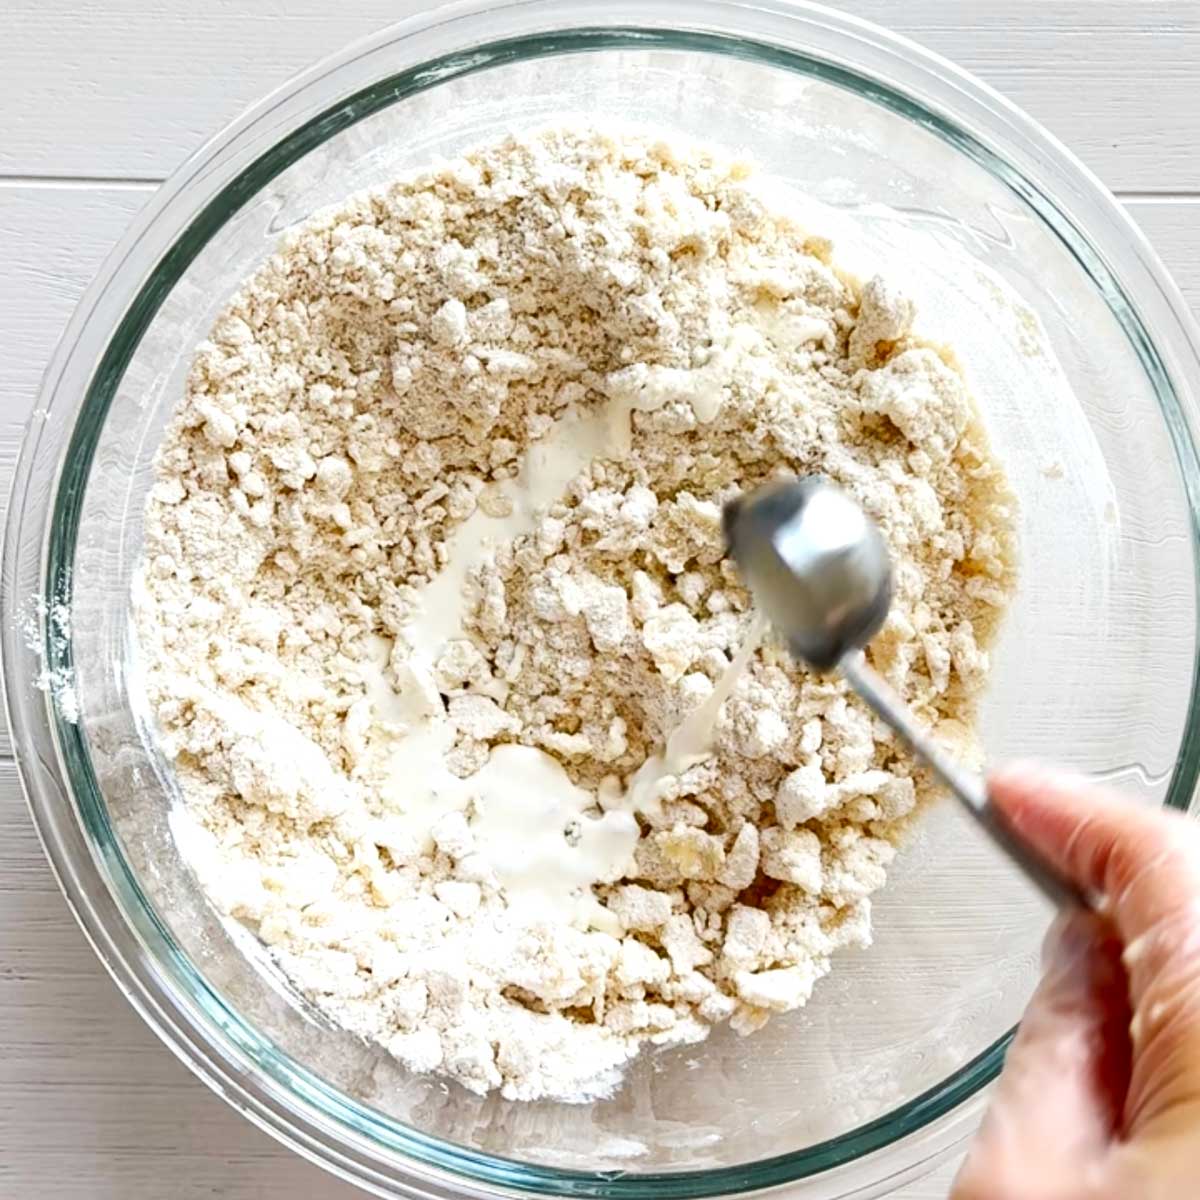 How to Make Vegan Scones Using Coconut Oil - Cauliflower Everything Bagel Scones